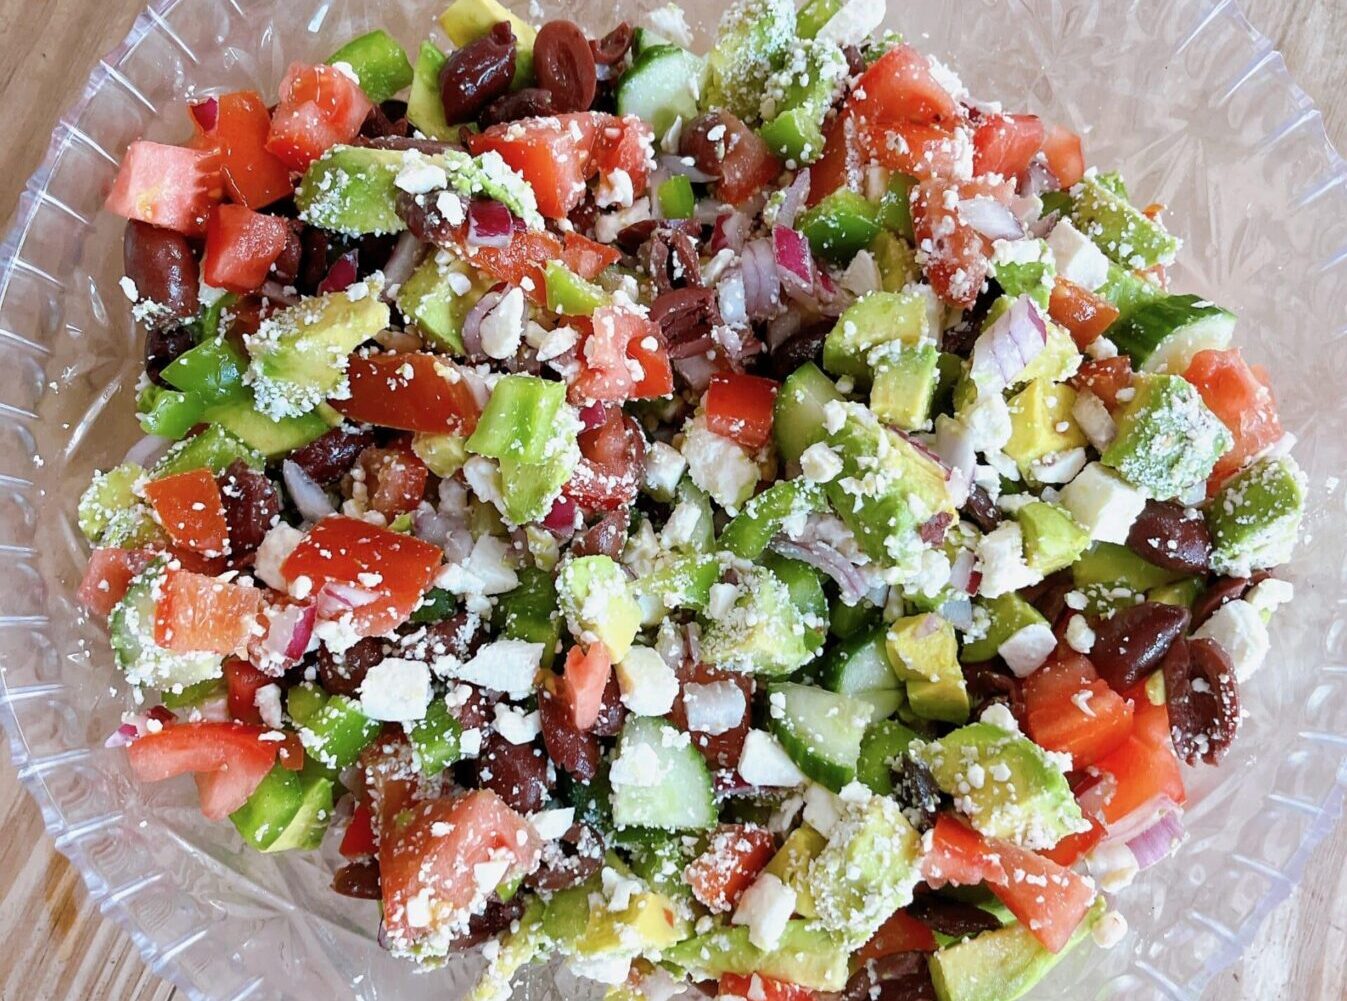 Avocado Greek Salad & Greek Salad Dressing